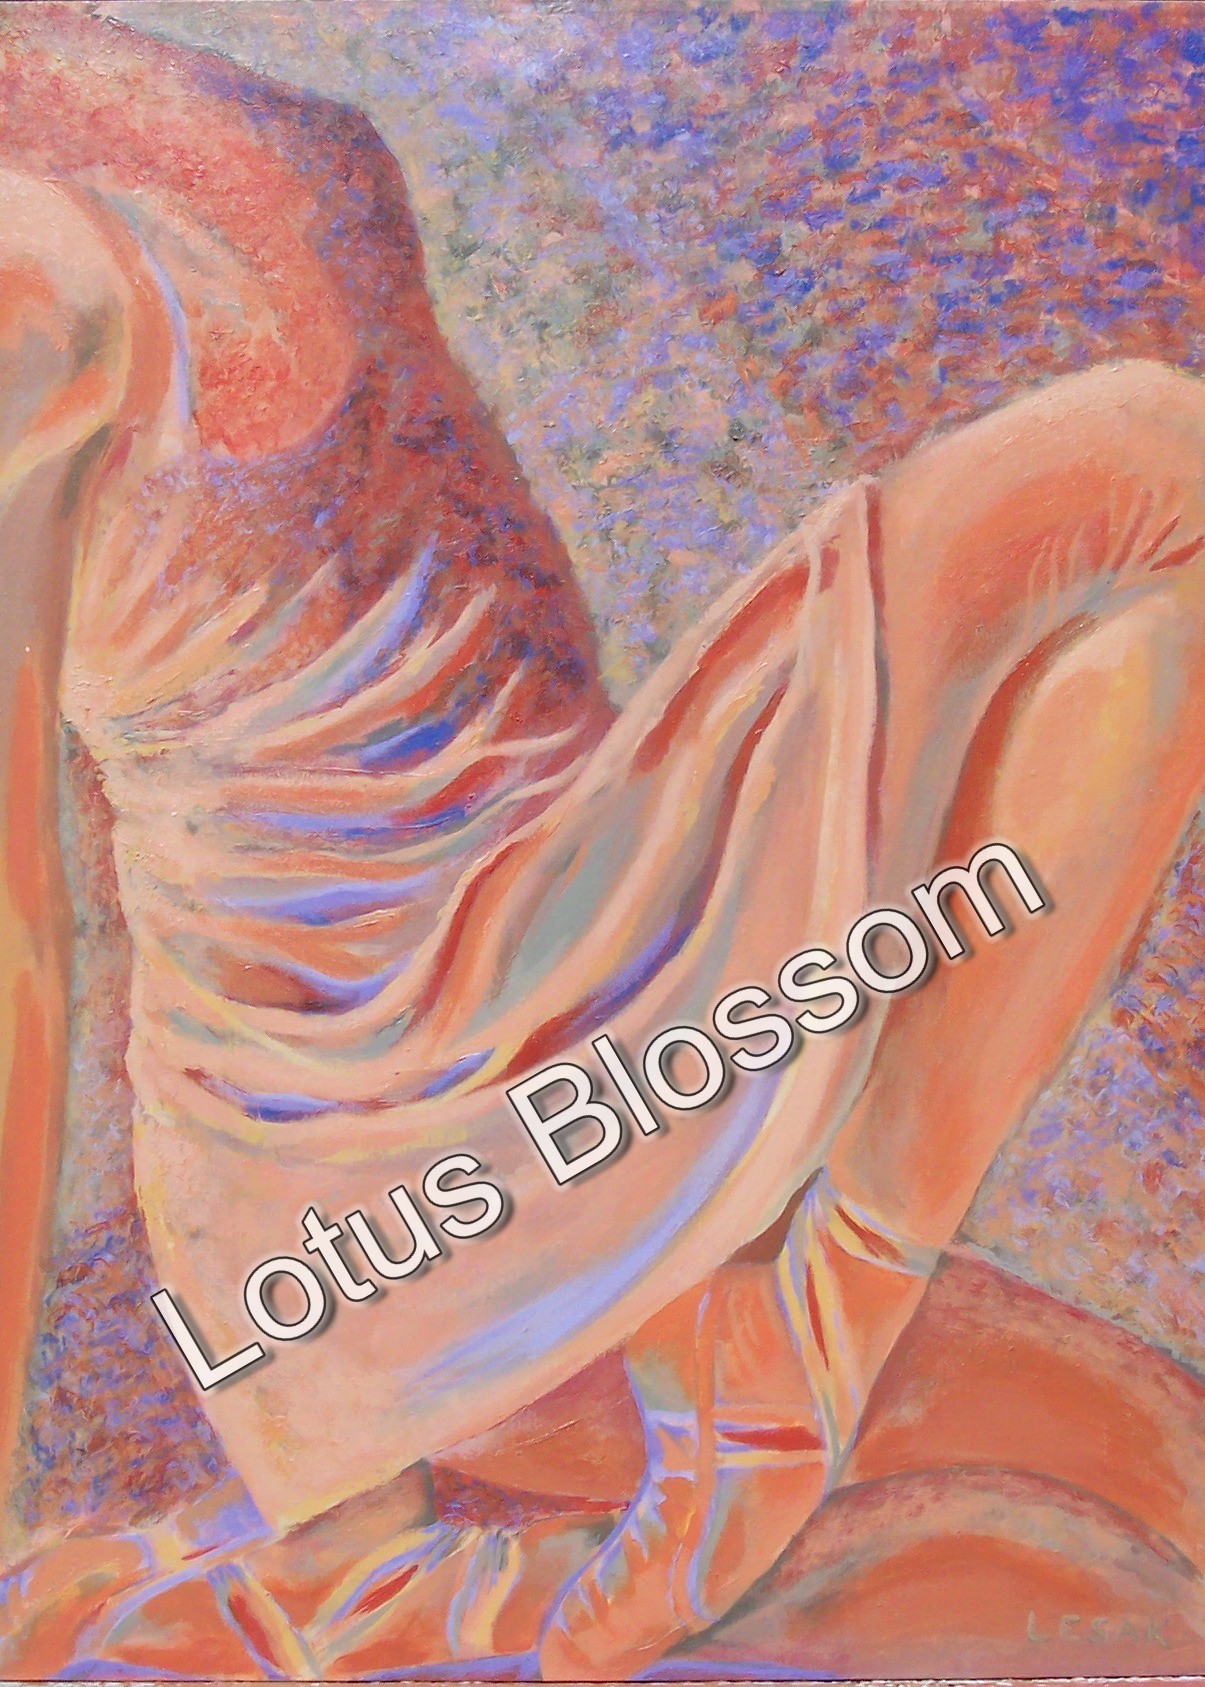 Dancer by Lotus Blossom